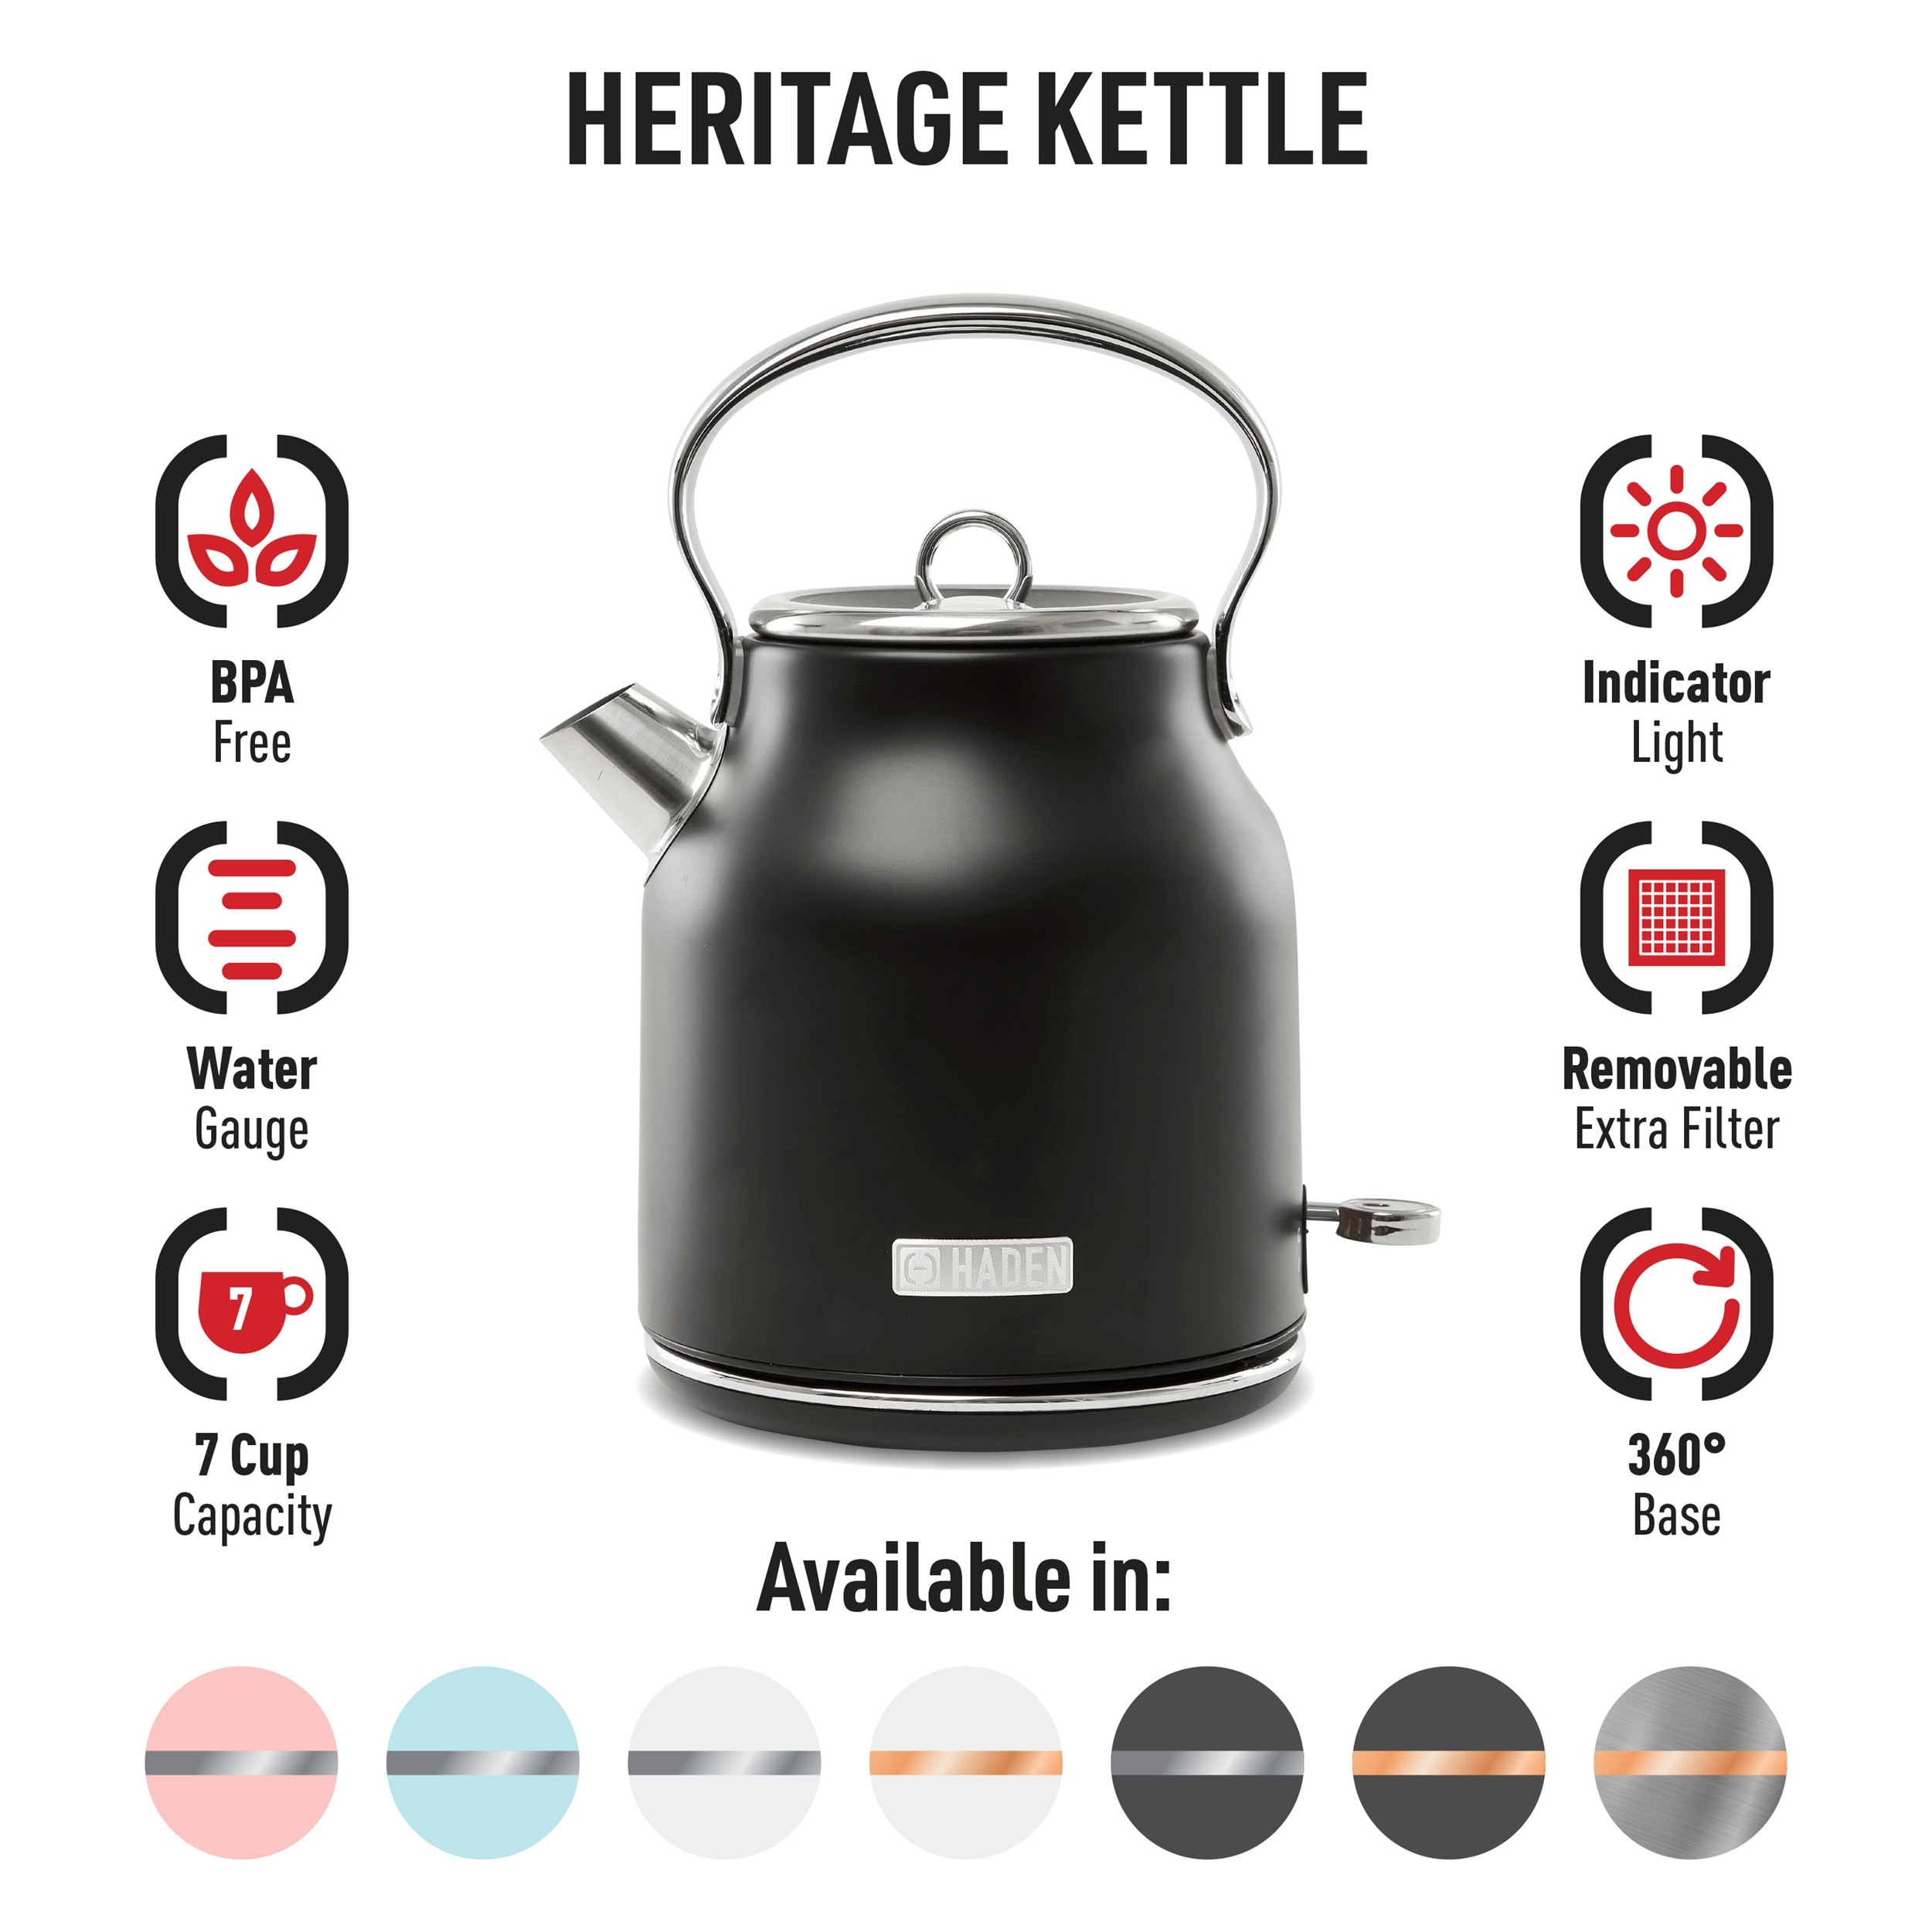 Haden Heritage 1.7 Liter Stainless Steel Electric Tea Kettle - Ivory